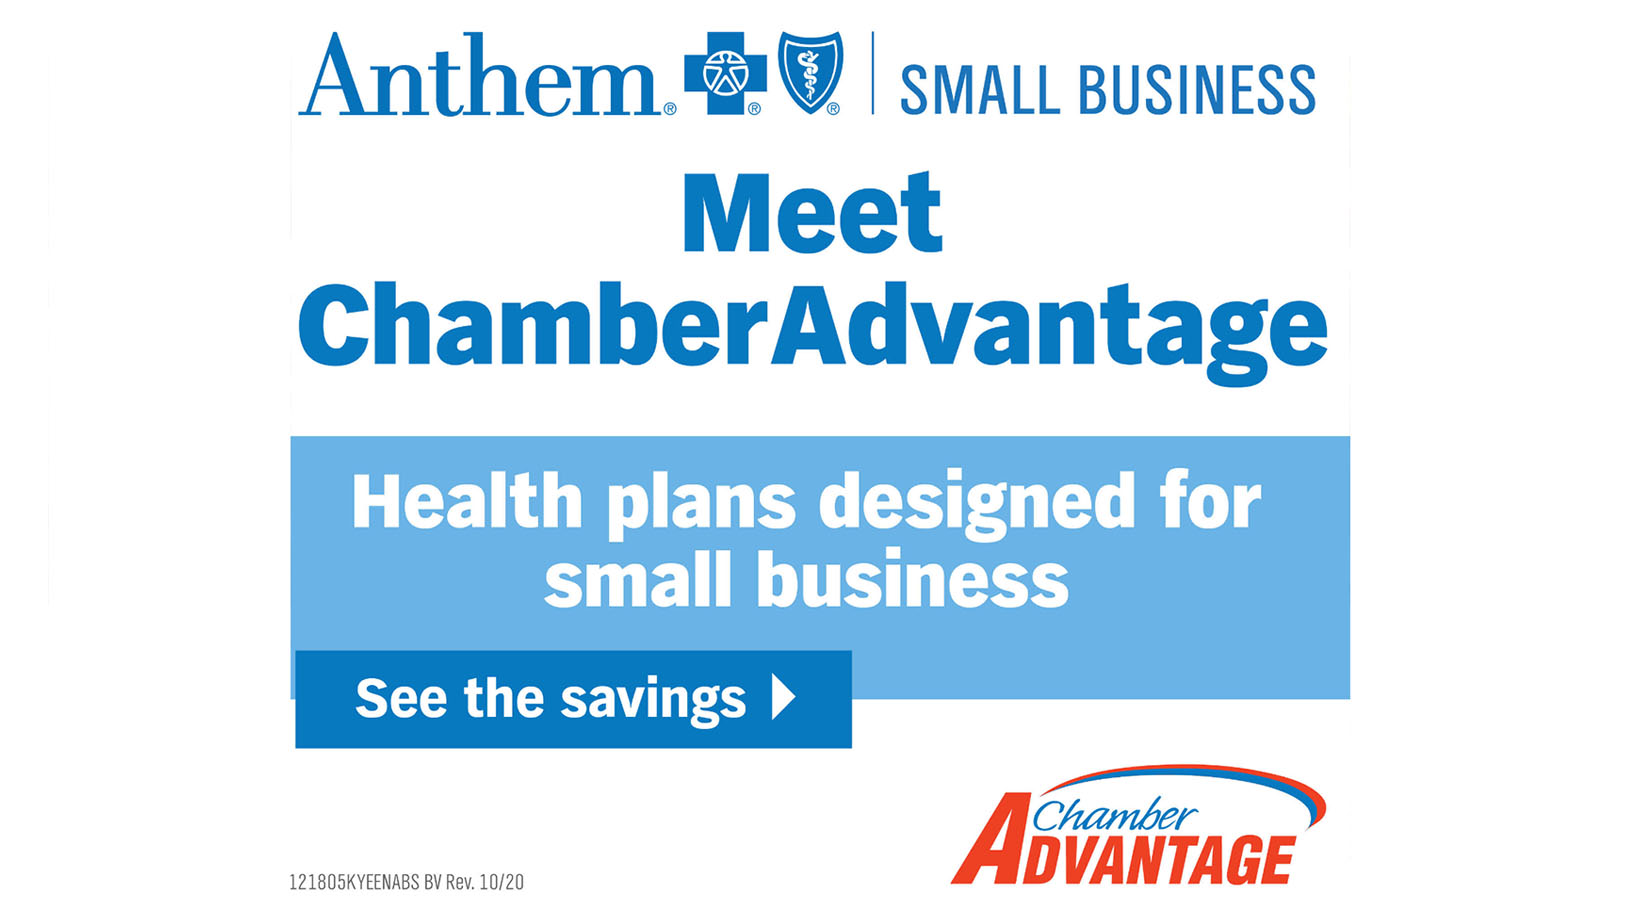 Chamber Advantage Anthem Small Business Button